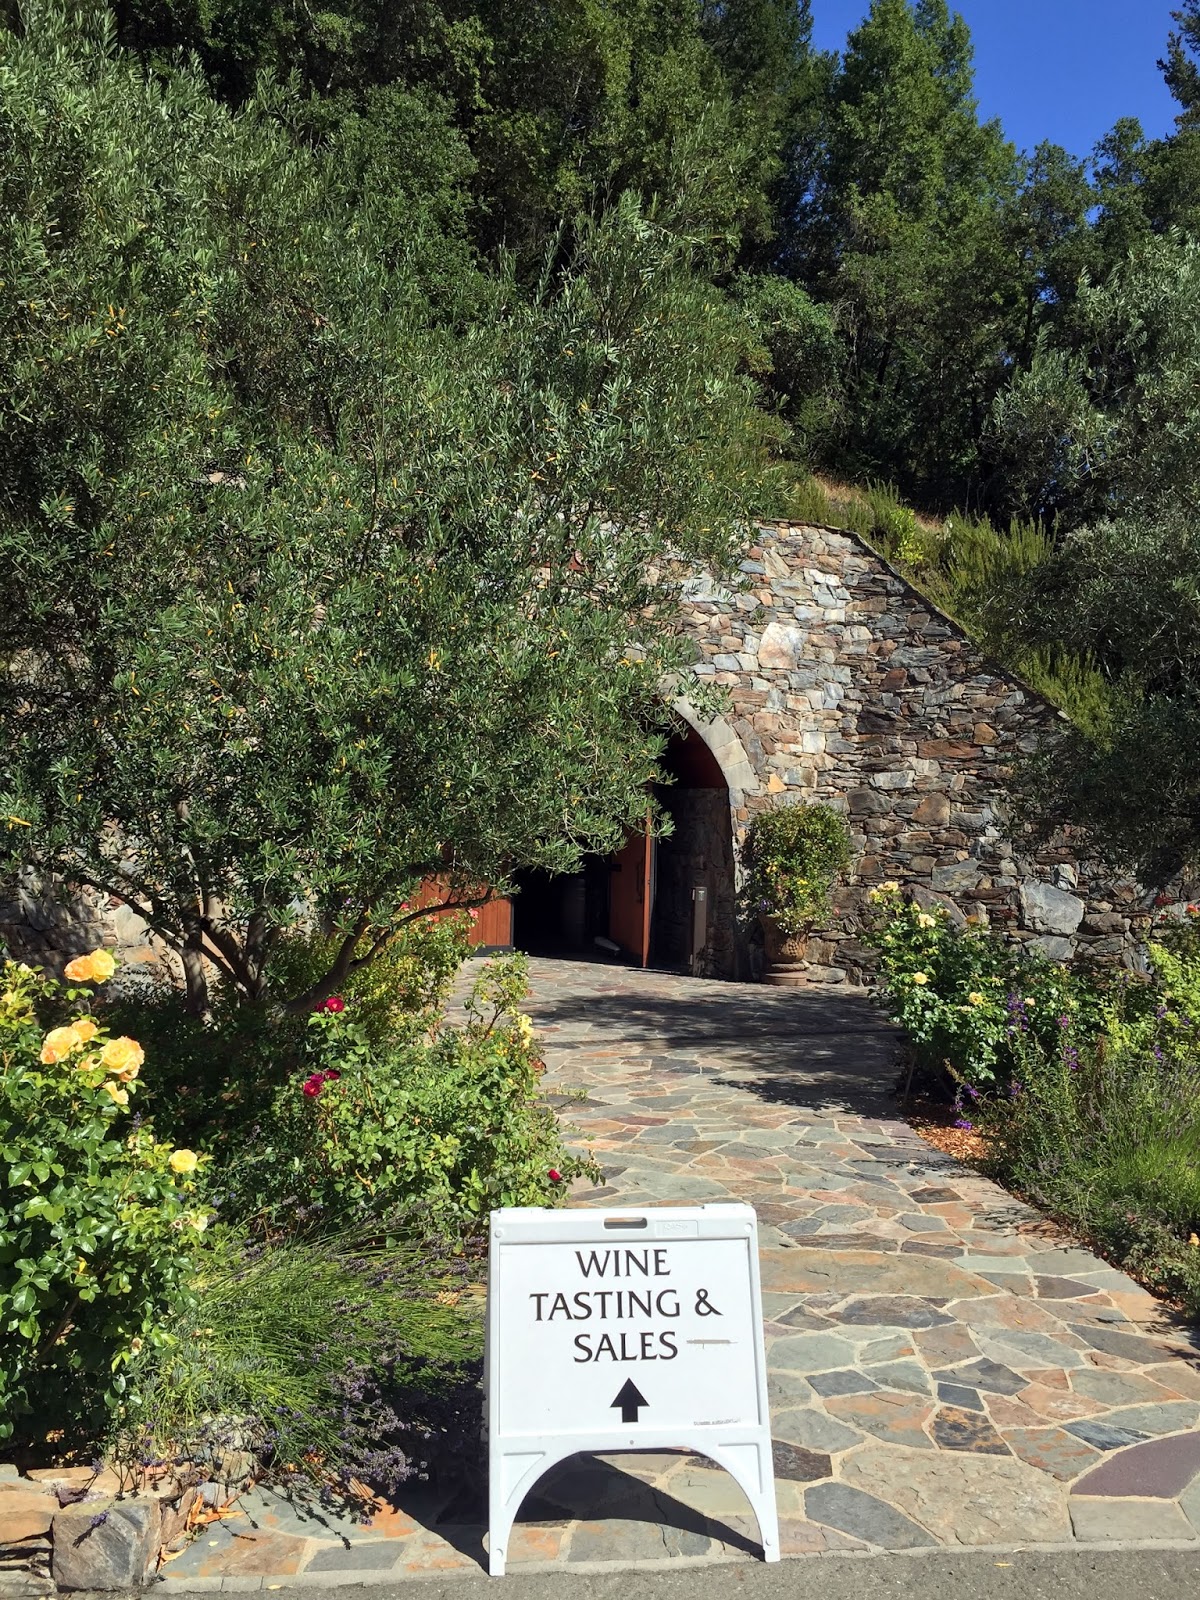 Visiting the Thomas George Estates Winery